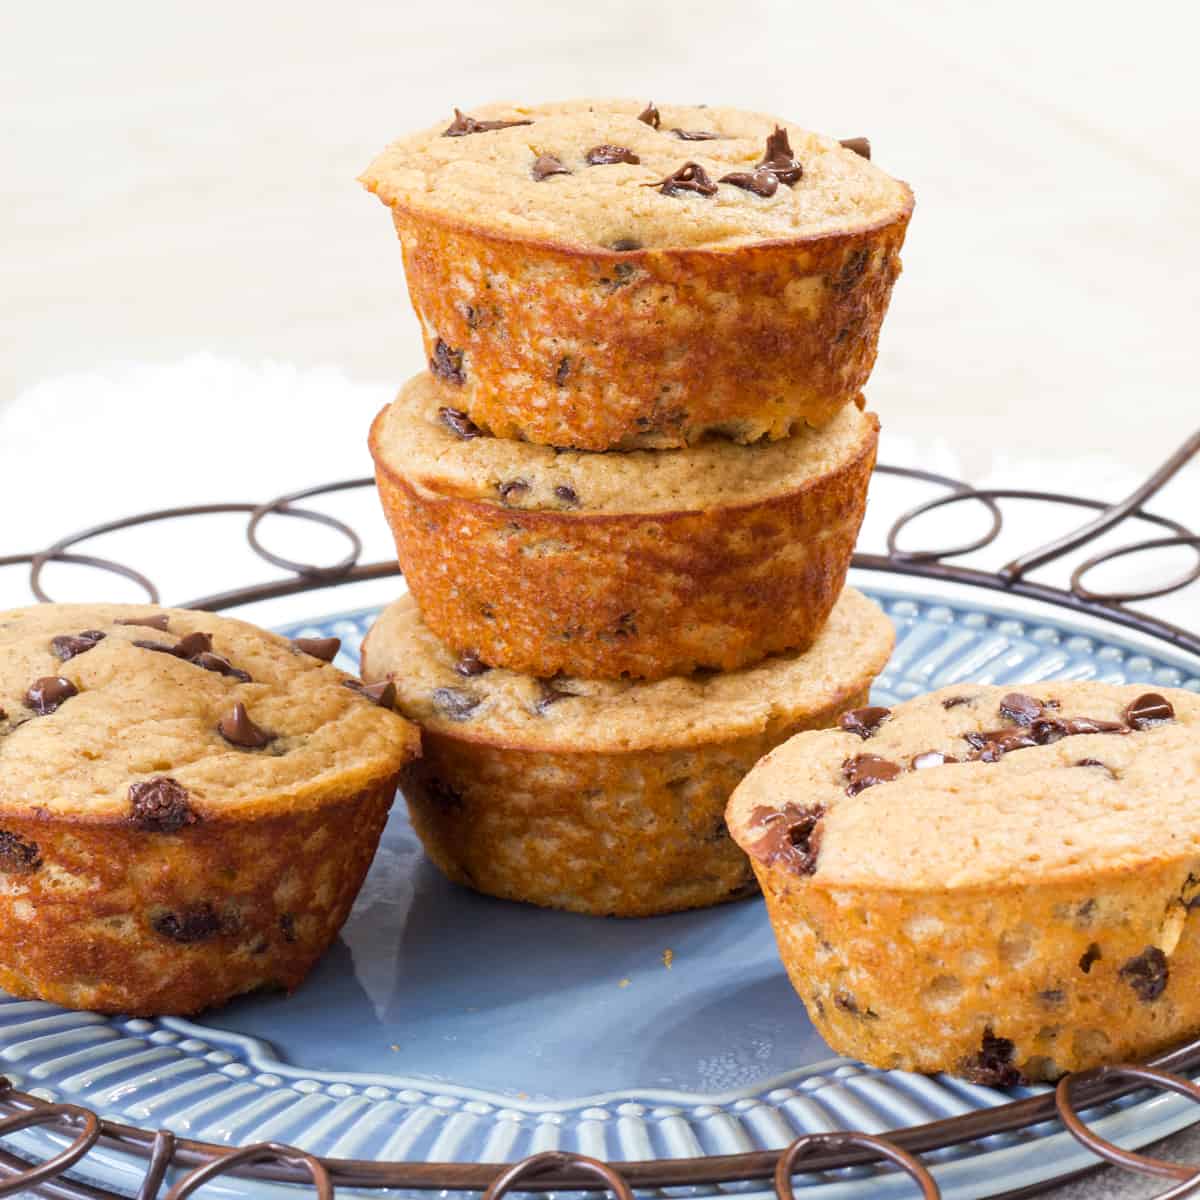 Kodiak Cakes Muffin Recipe (without banana) - Mindy's Cooking